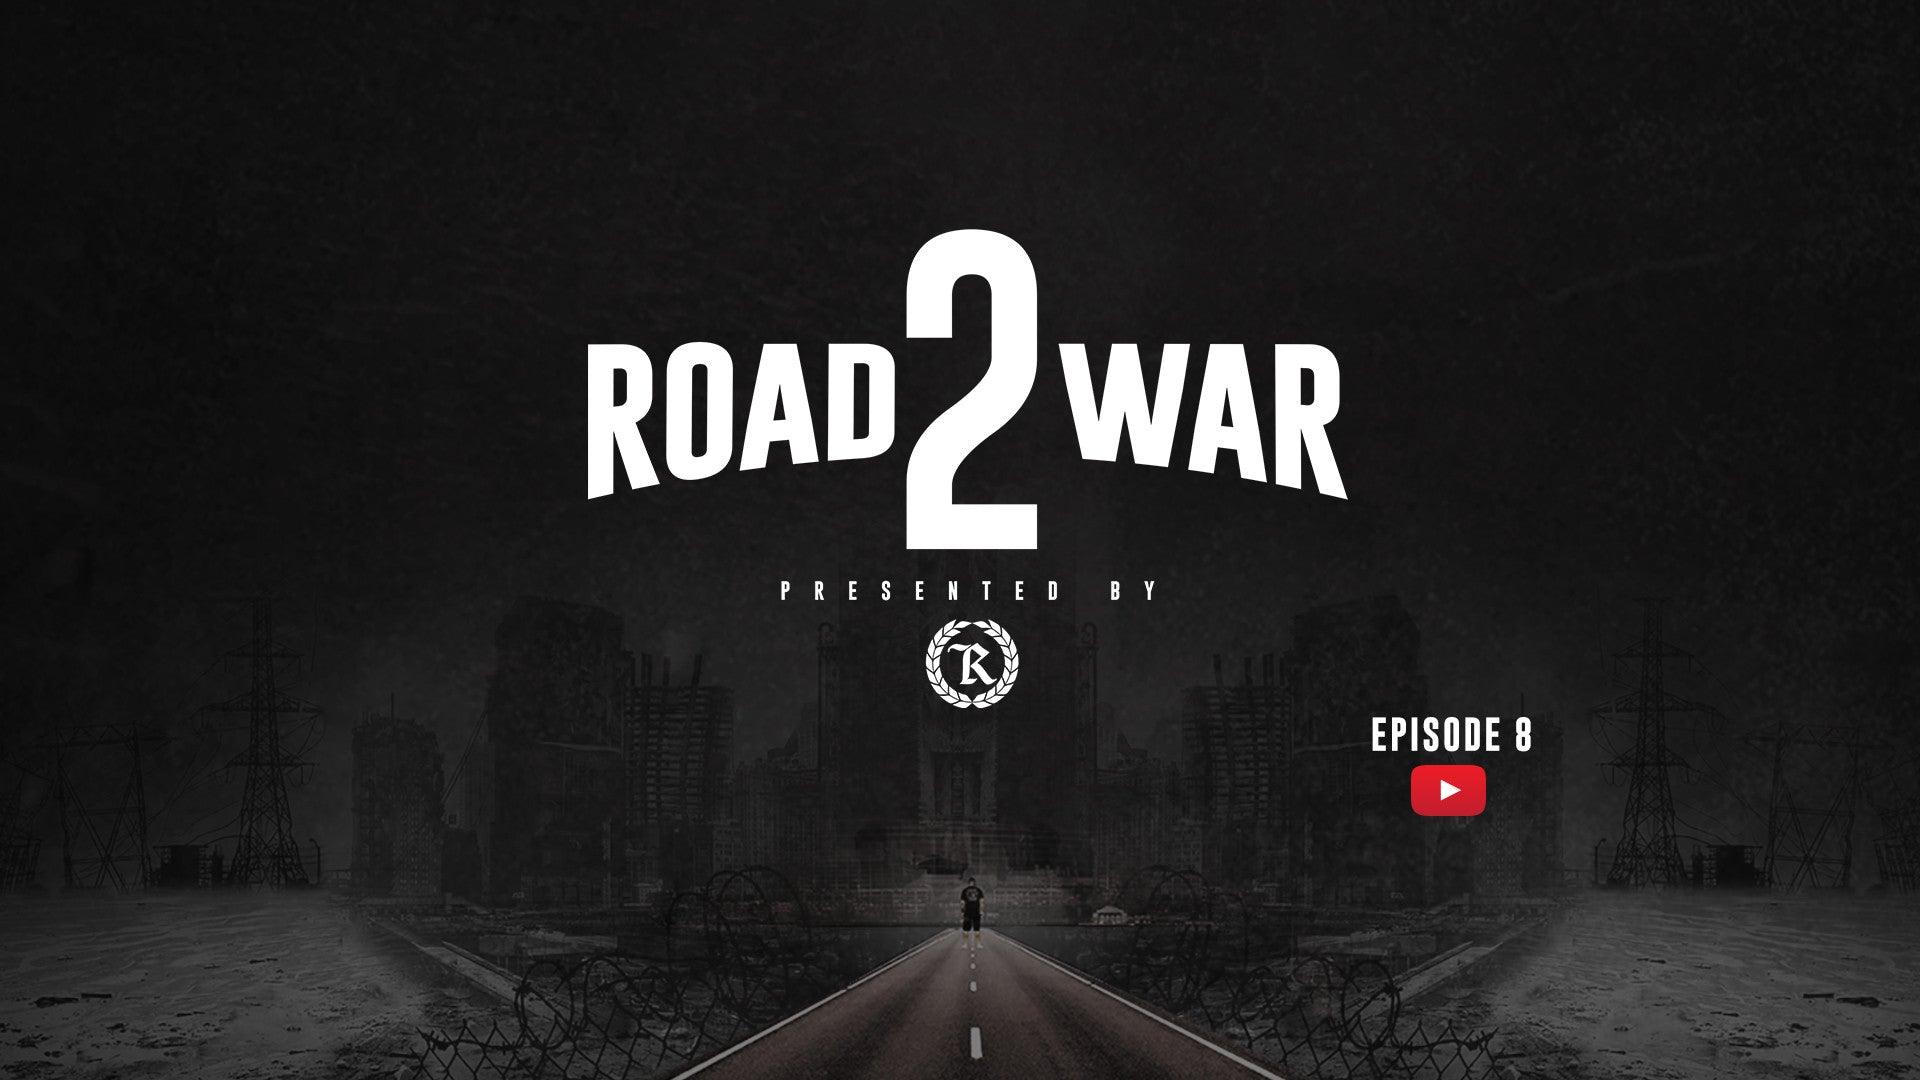 Road 2 War || Episode 8 || Nate Diaz || Las Vegas || UFC 202 - Represent Ltd.™